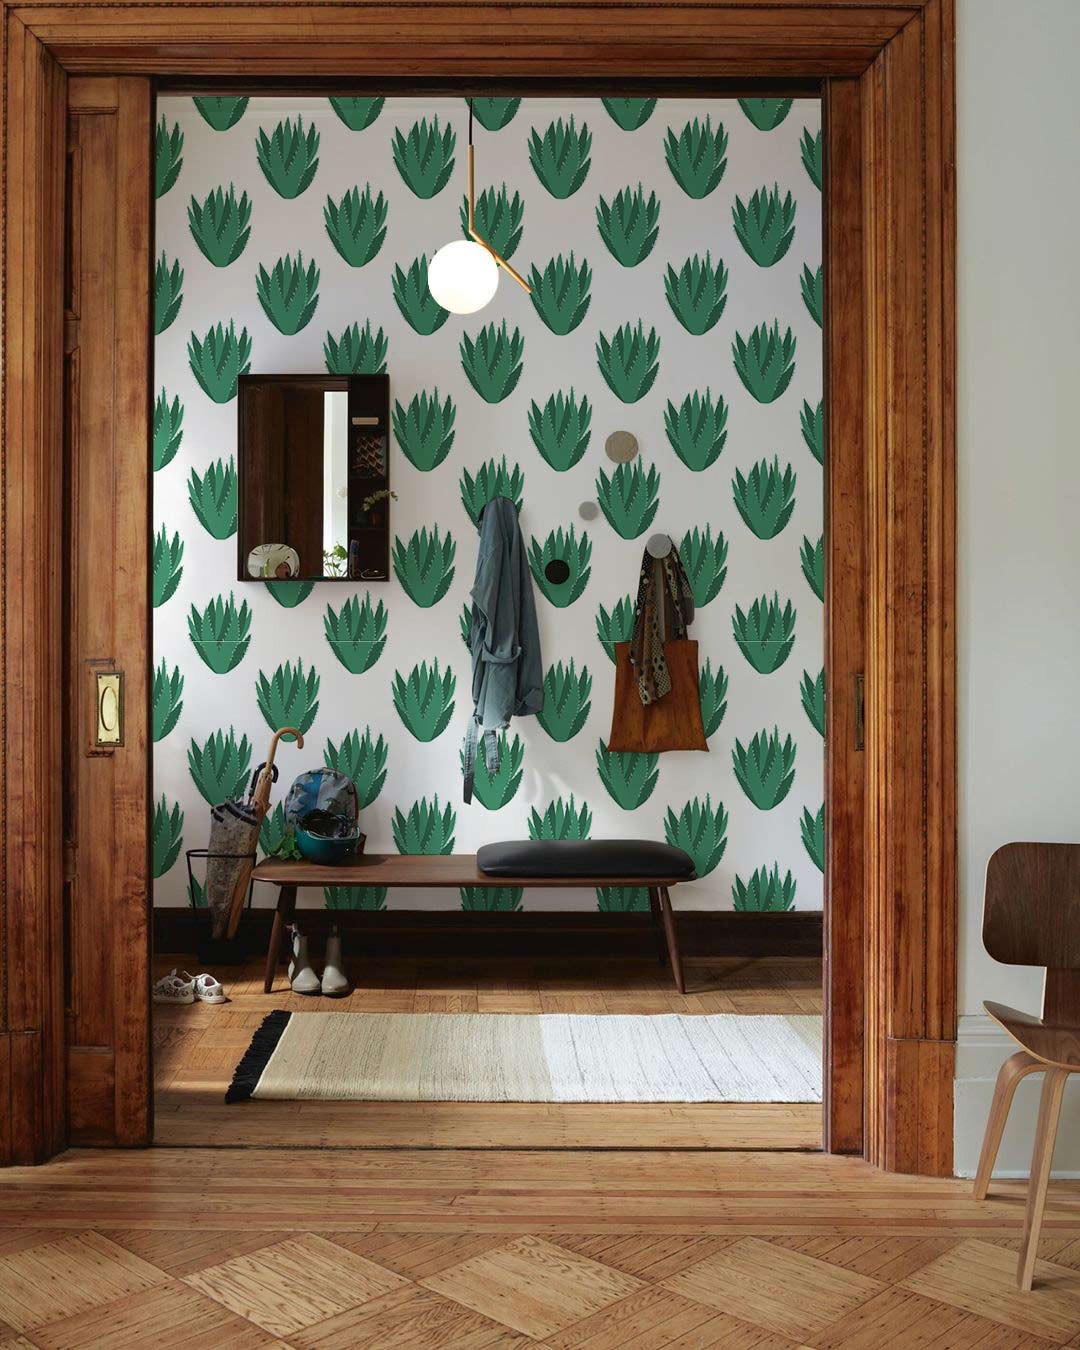 Aloe Cactus Pattern Mural Wallpaper Home Interior Decor